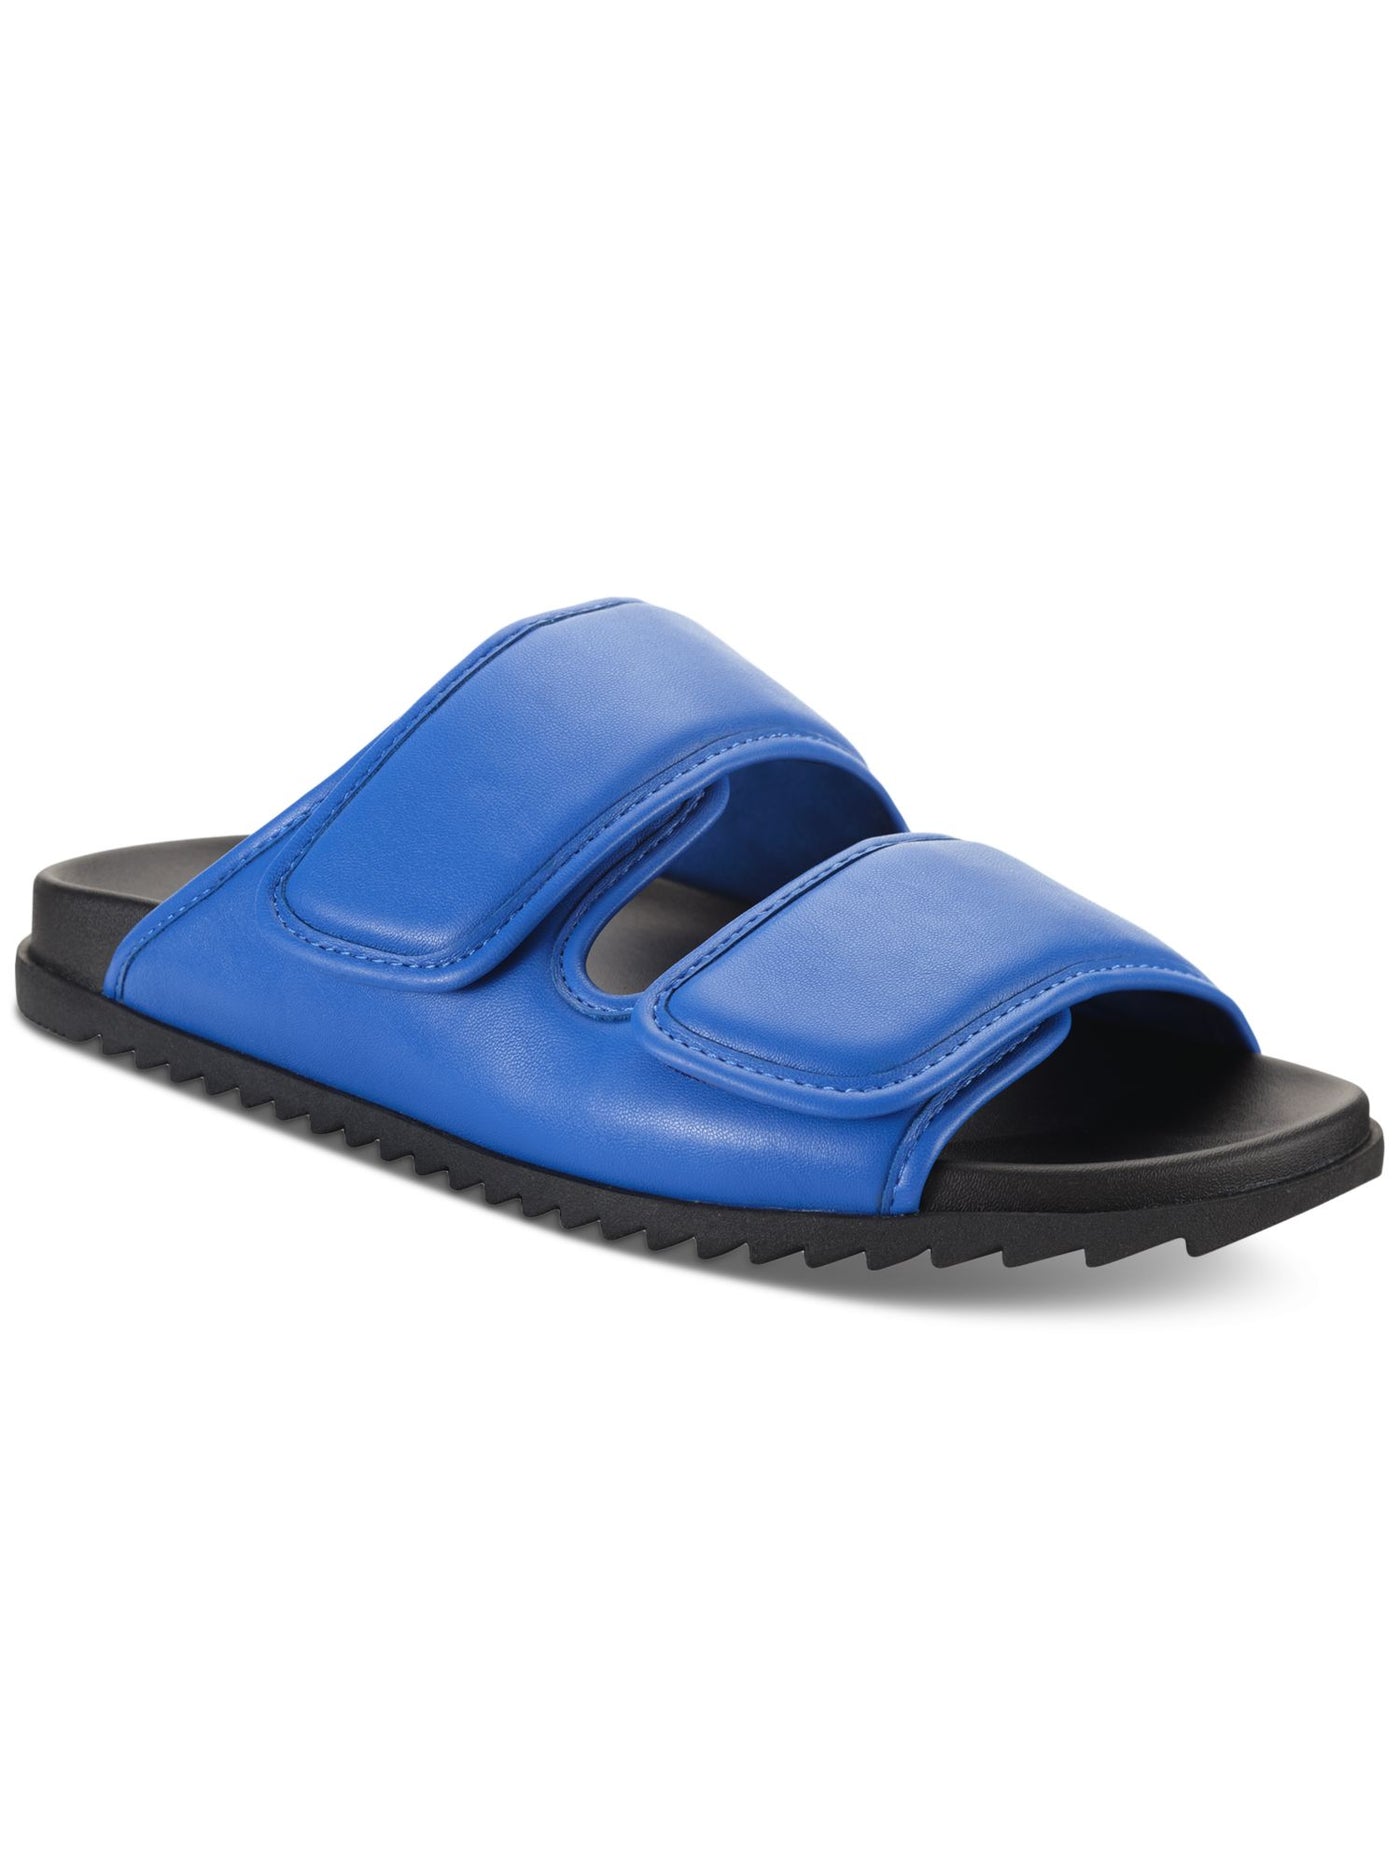 INC Mens Blue Treaded Open Toe Platform Slide Sandals Shoes 7 M